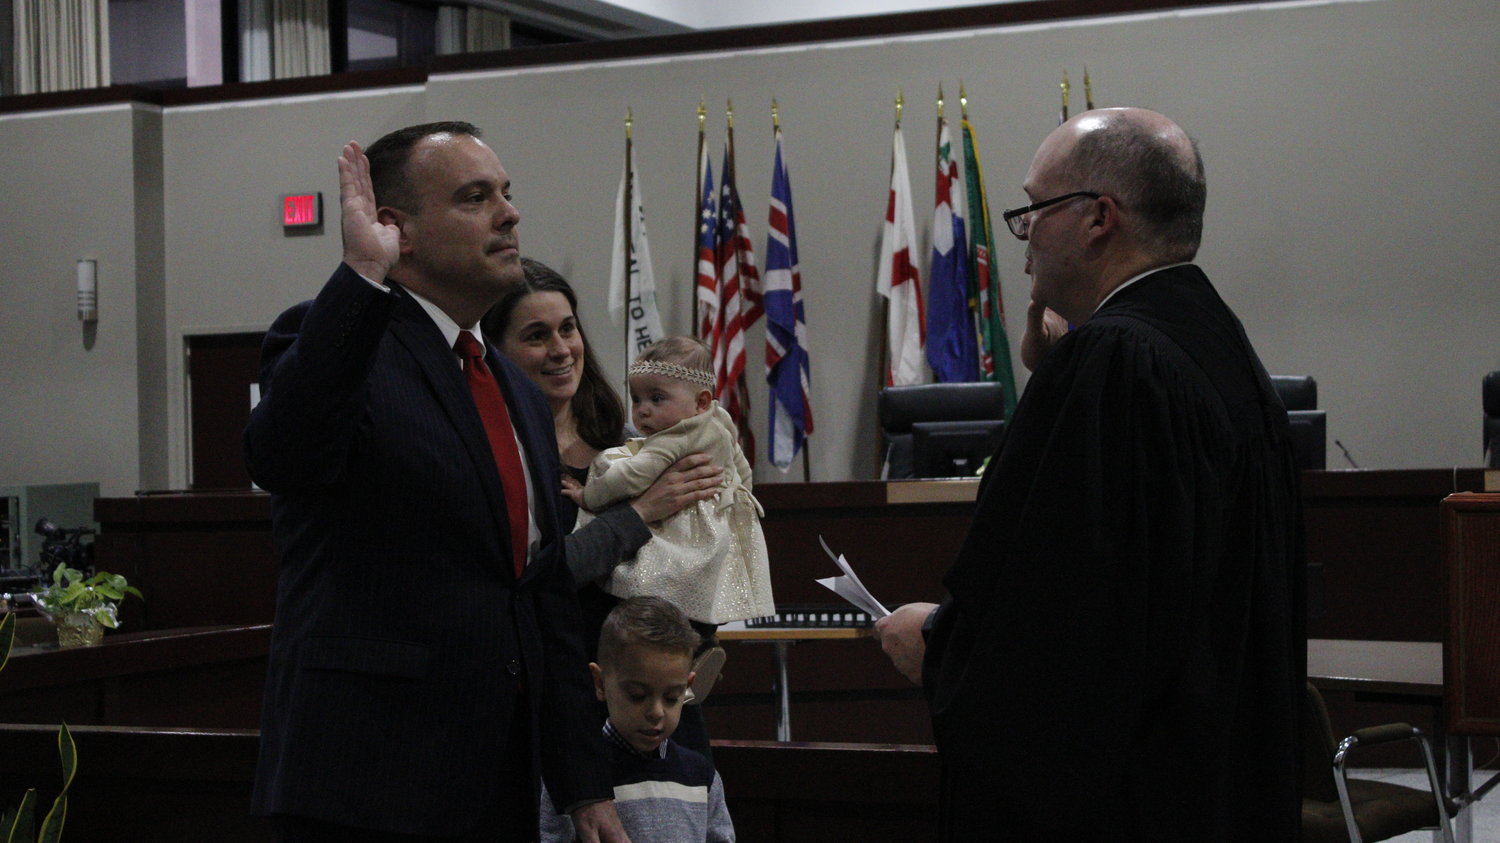 Councilman Dan Panico is sworn in by Hon. James Hudson